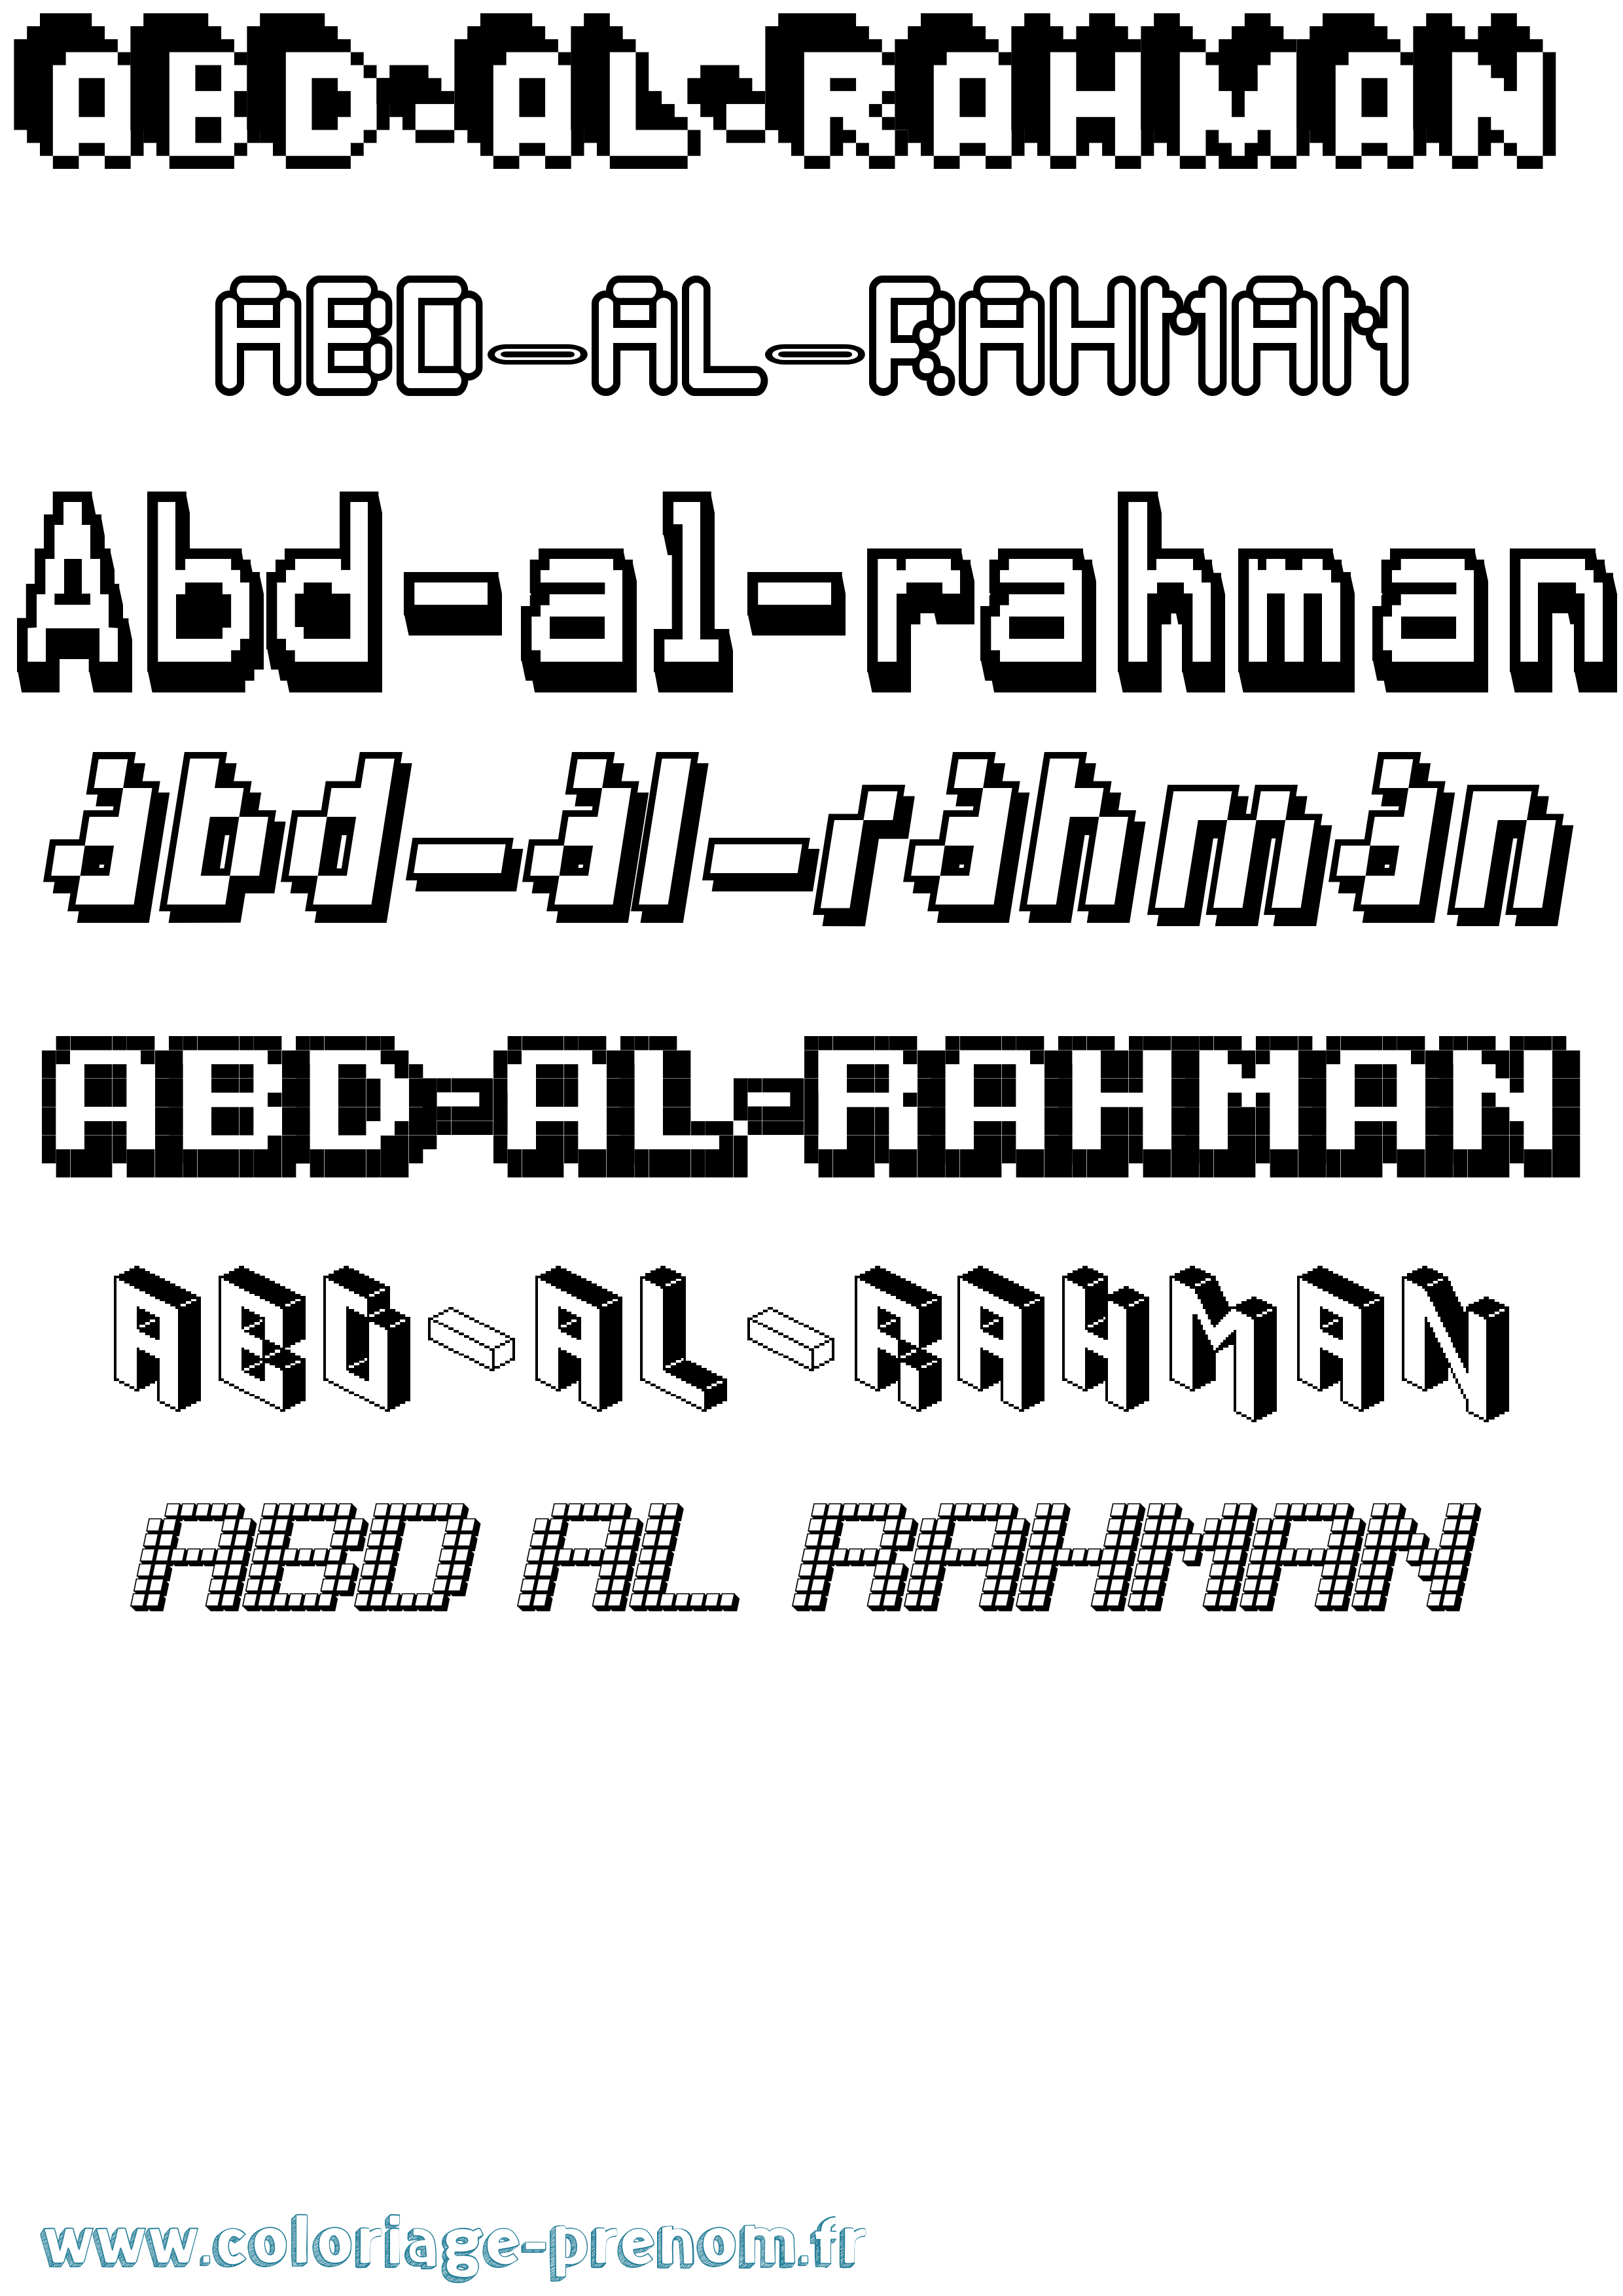 Coloriage prénom Abd-Al-Rahman Pixel